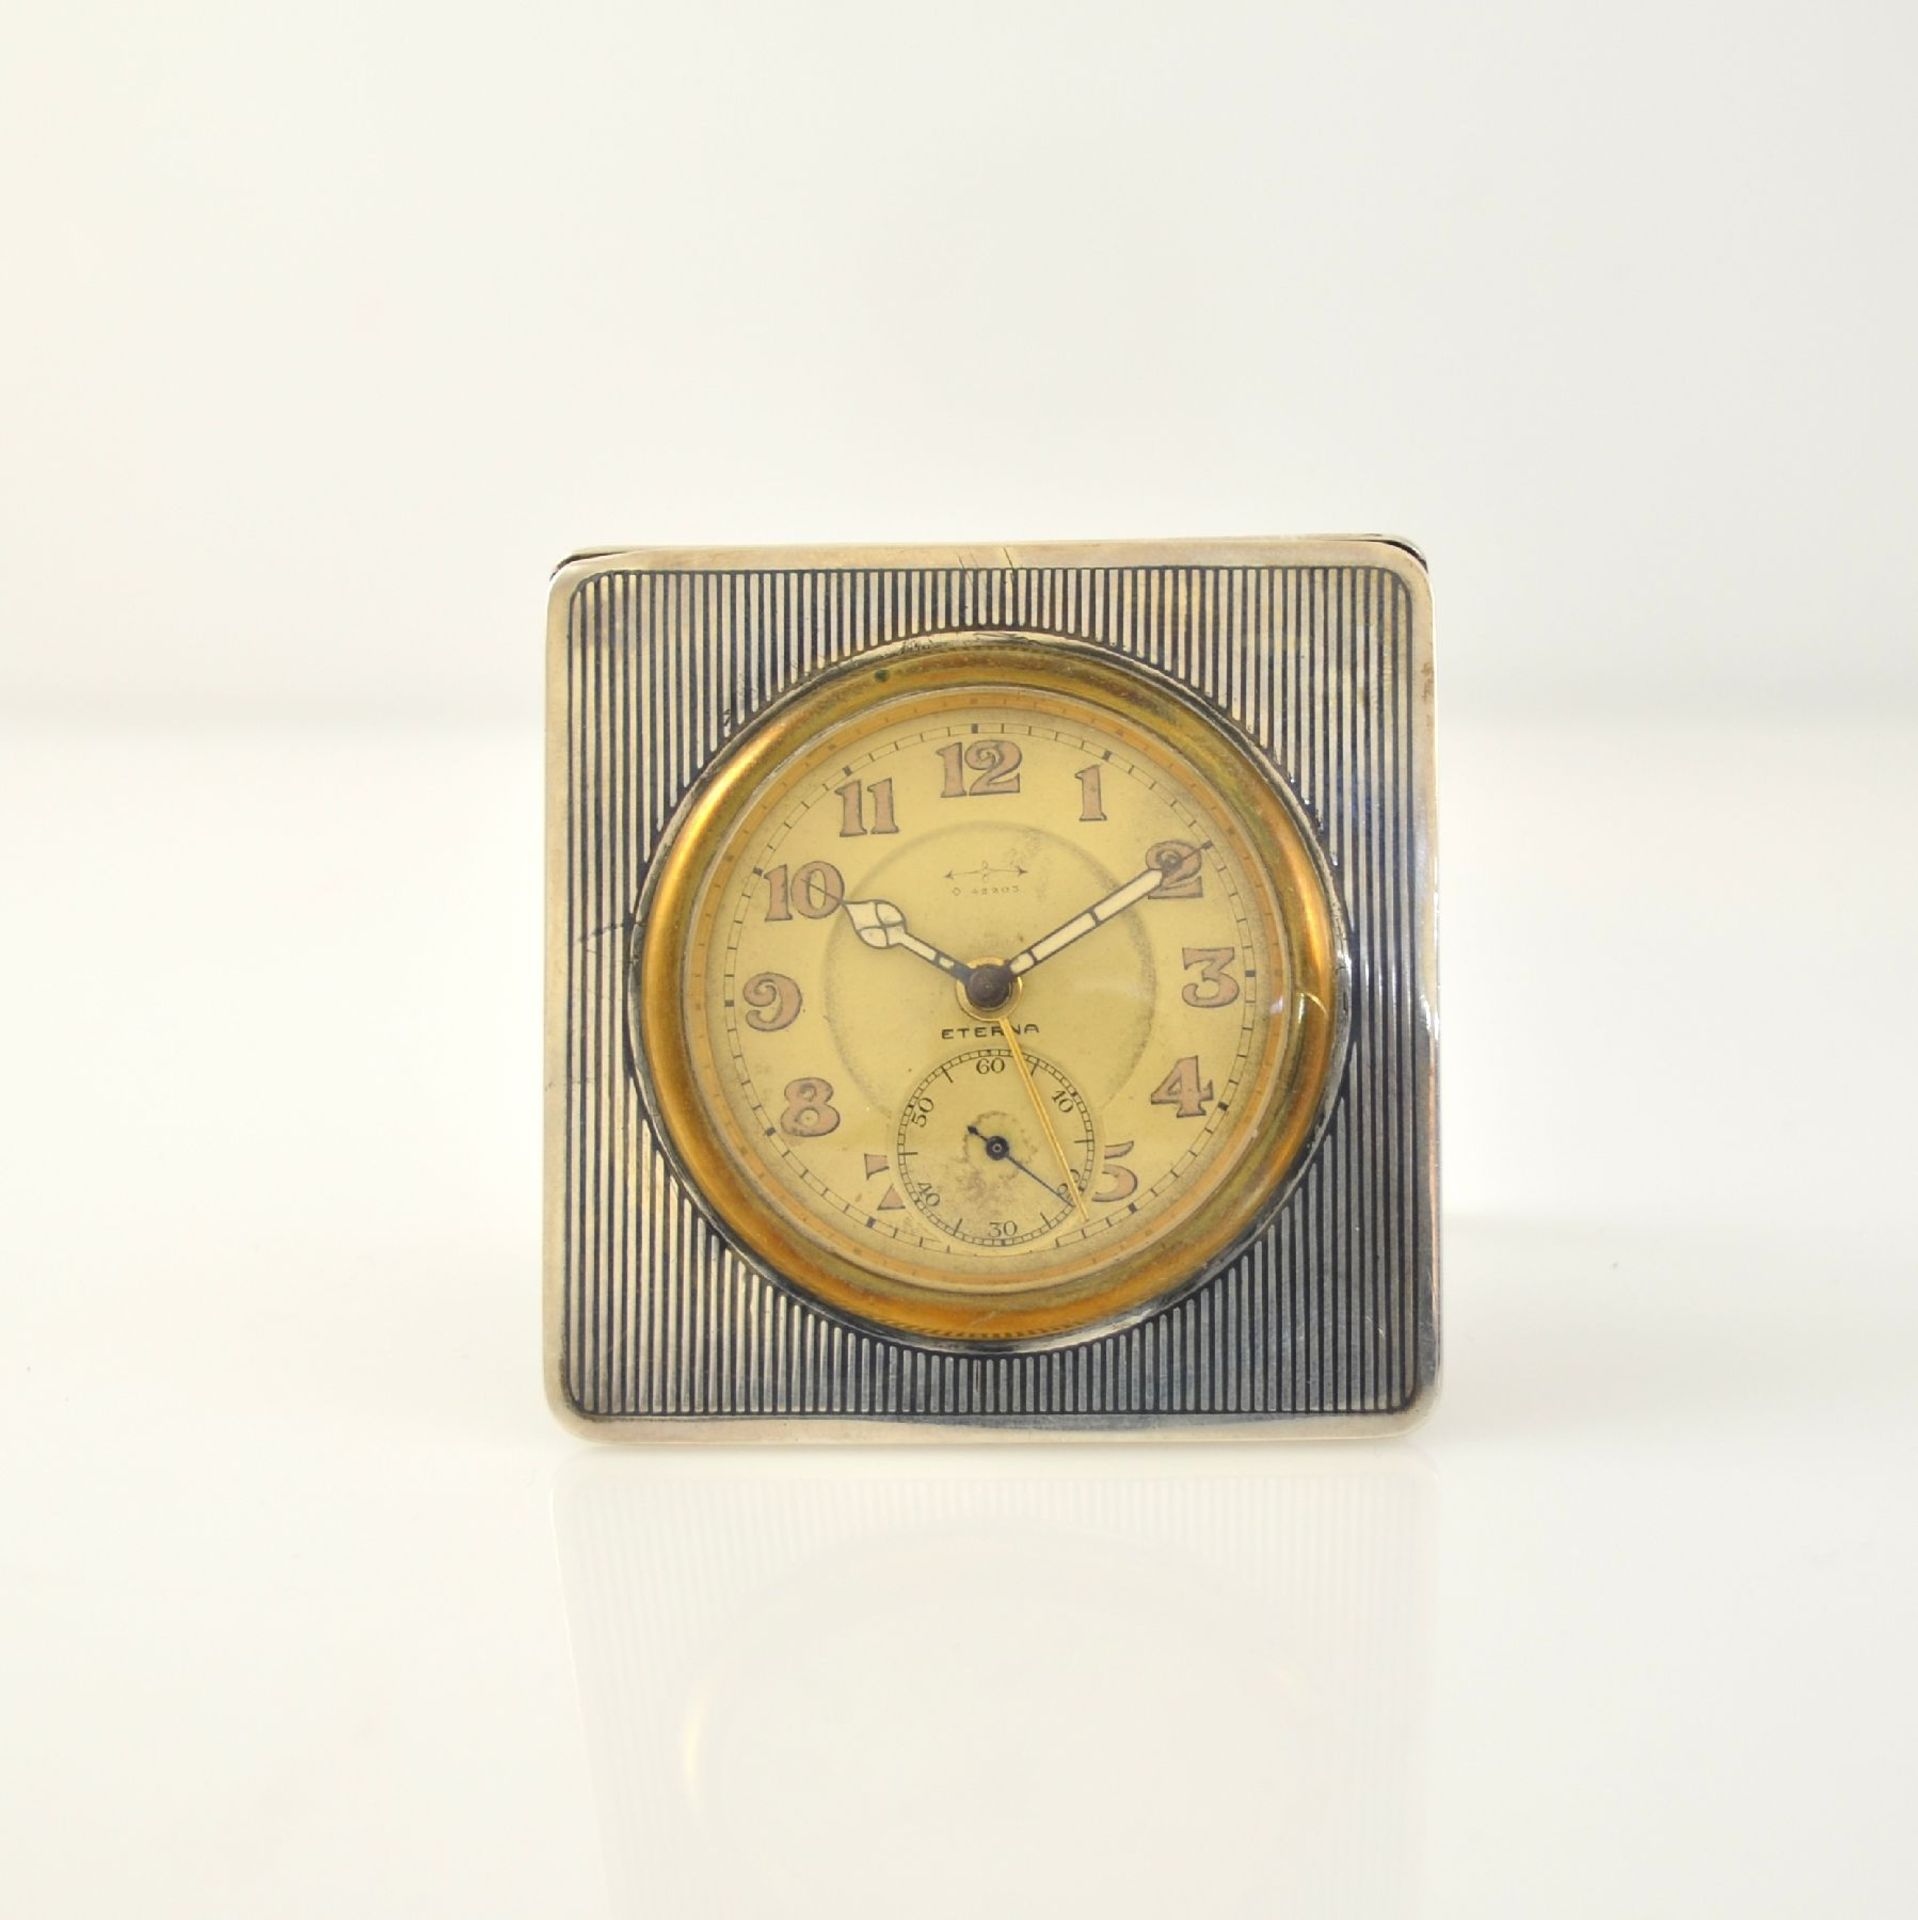 ETERNA Konvolut 3 table clocks & one board watch, Switzerland approx. 1910-1930, 1. small board